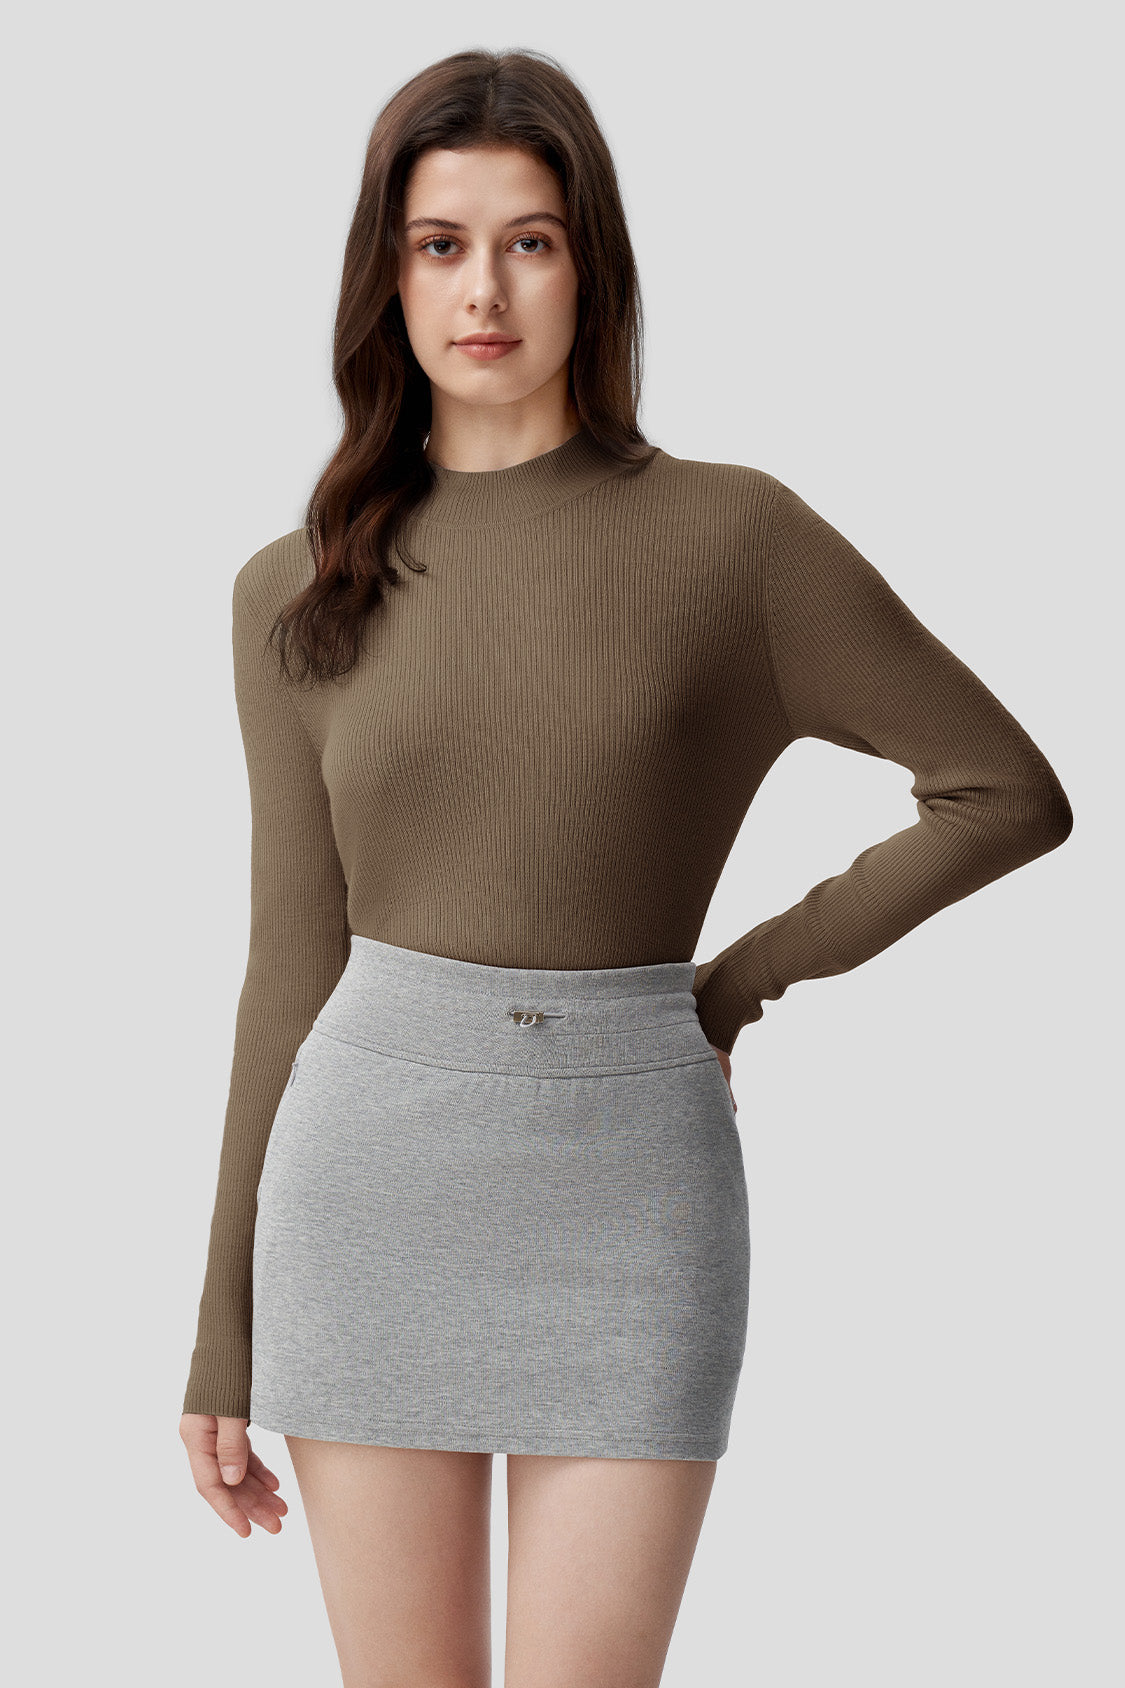 beneunder women's wool baselayer sweater #color_truffle brown